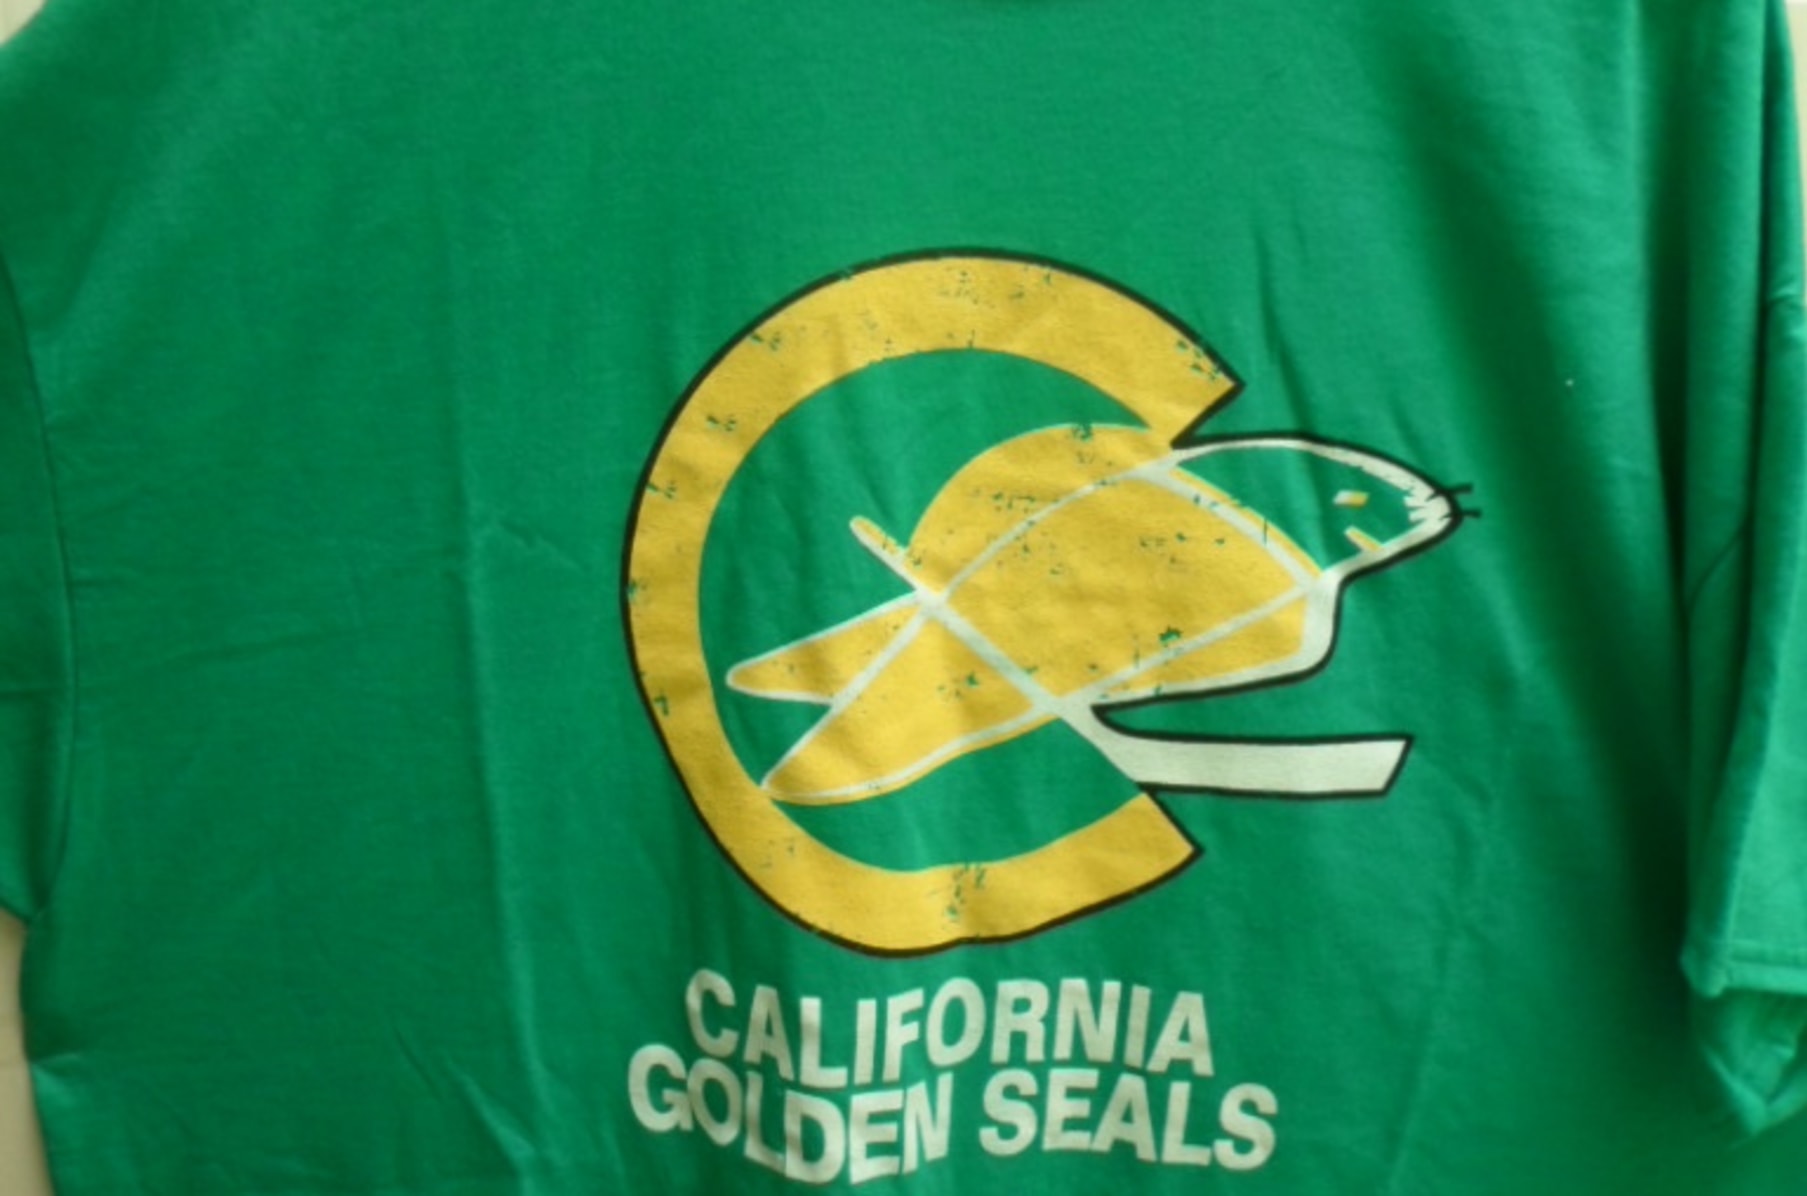 California Golden Seals Retro T Shirt